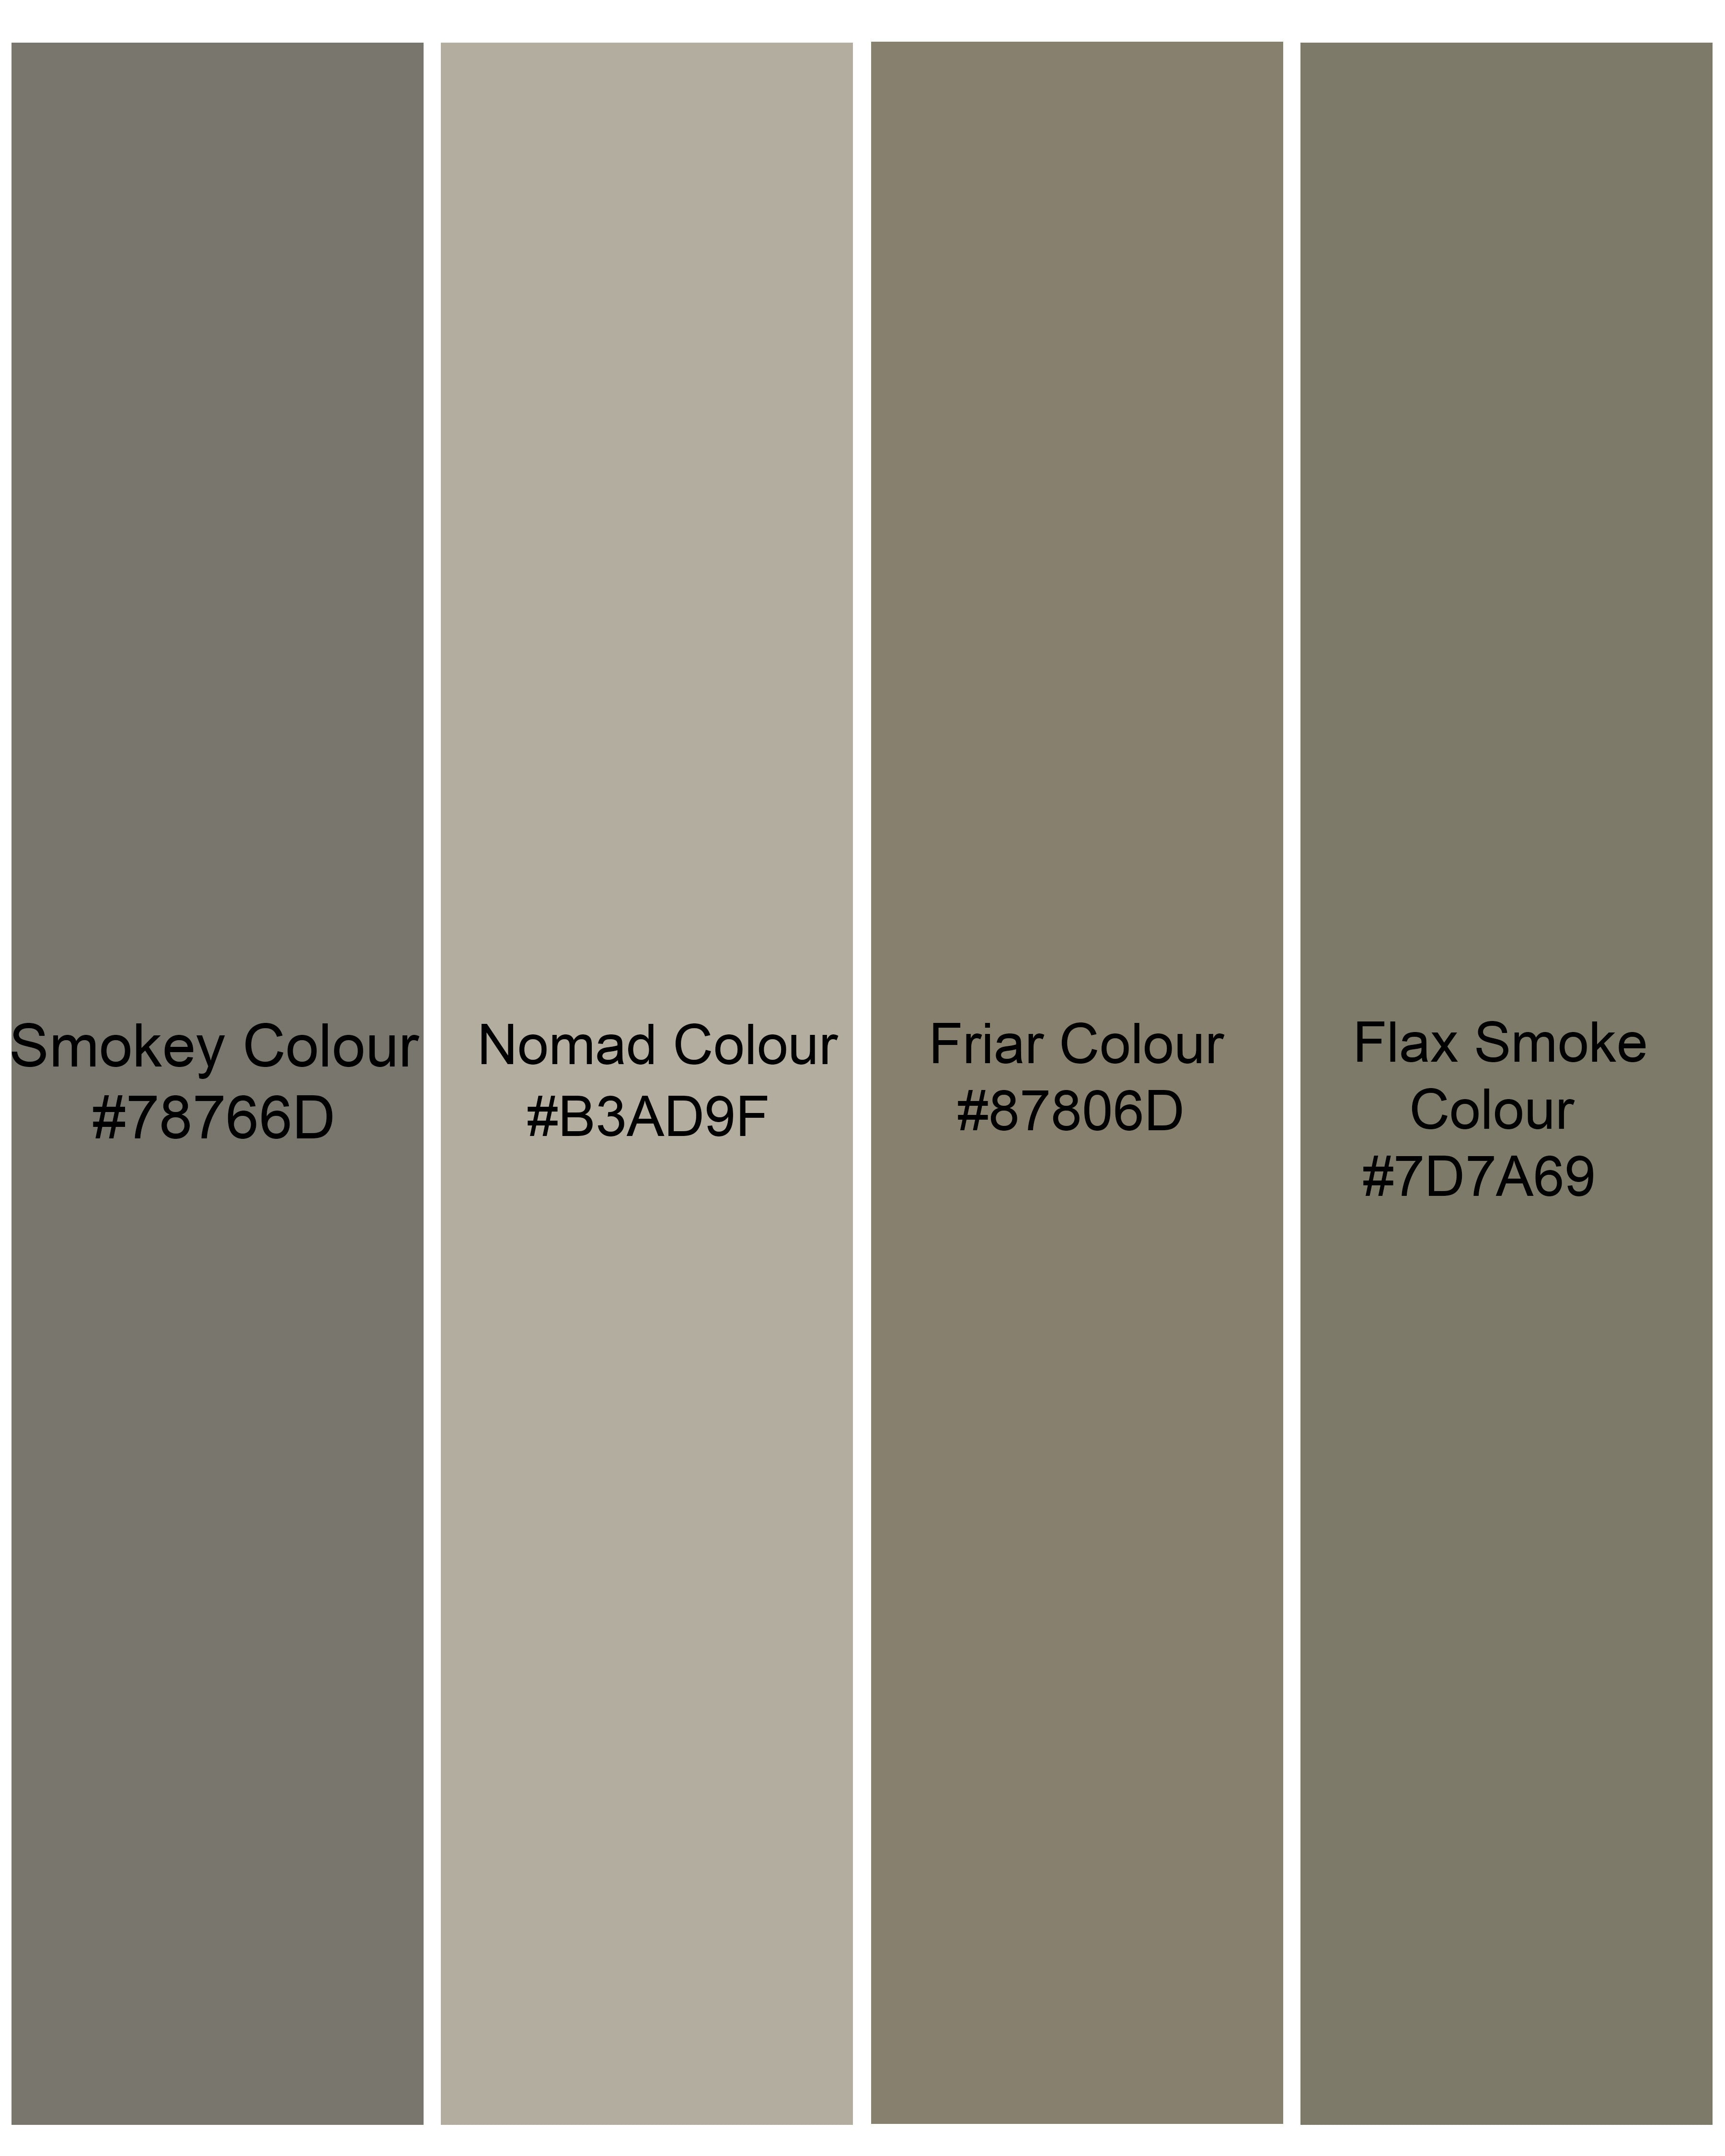 Flax Smoke Green with Nomad Cream Camouflage Premium Cotton Designer Blazer BL2435-SB-PP-36,BL2435-SB-PP-38,BL2435-SB-PP-40,BL2435-SB-PP-42,BL2435-SB-PP-44,BL2435-SB-PP-46,BL2435-SB-PP-48,BL2435-SB-PP-50,BL2435-SB-PP-52,BL2435-SB-PP-54,BL2435-SB-PP-56,BL2435-SB-PP-58,BL2435-SB-PP-60